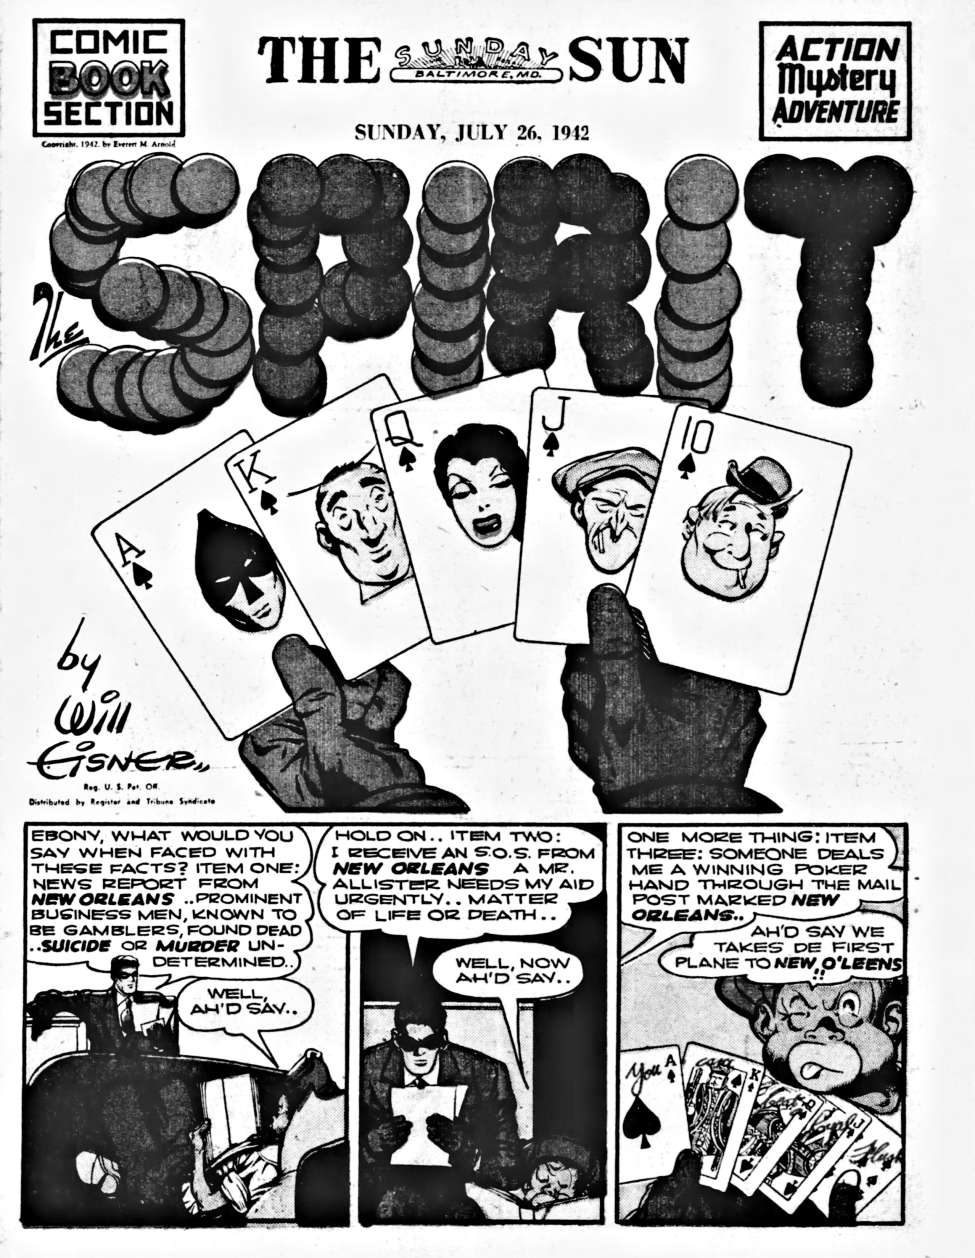 Book Cover For The Spirit (1942-07-26) - Baltimore Sun (b/w)